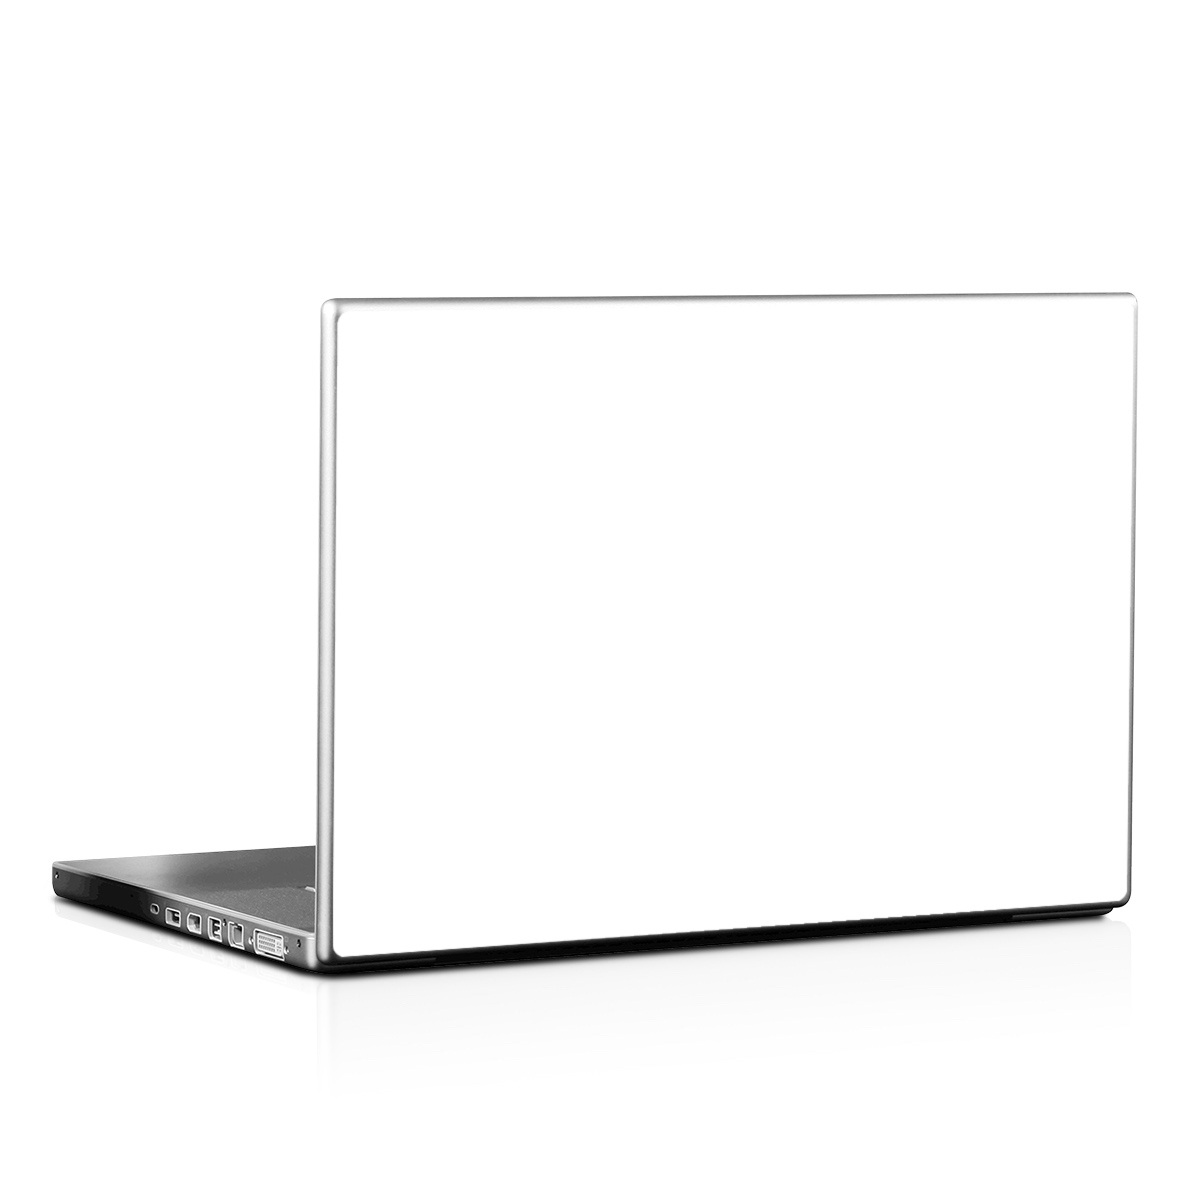 Laptop Skin - Solid State White (Image 1)